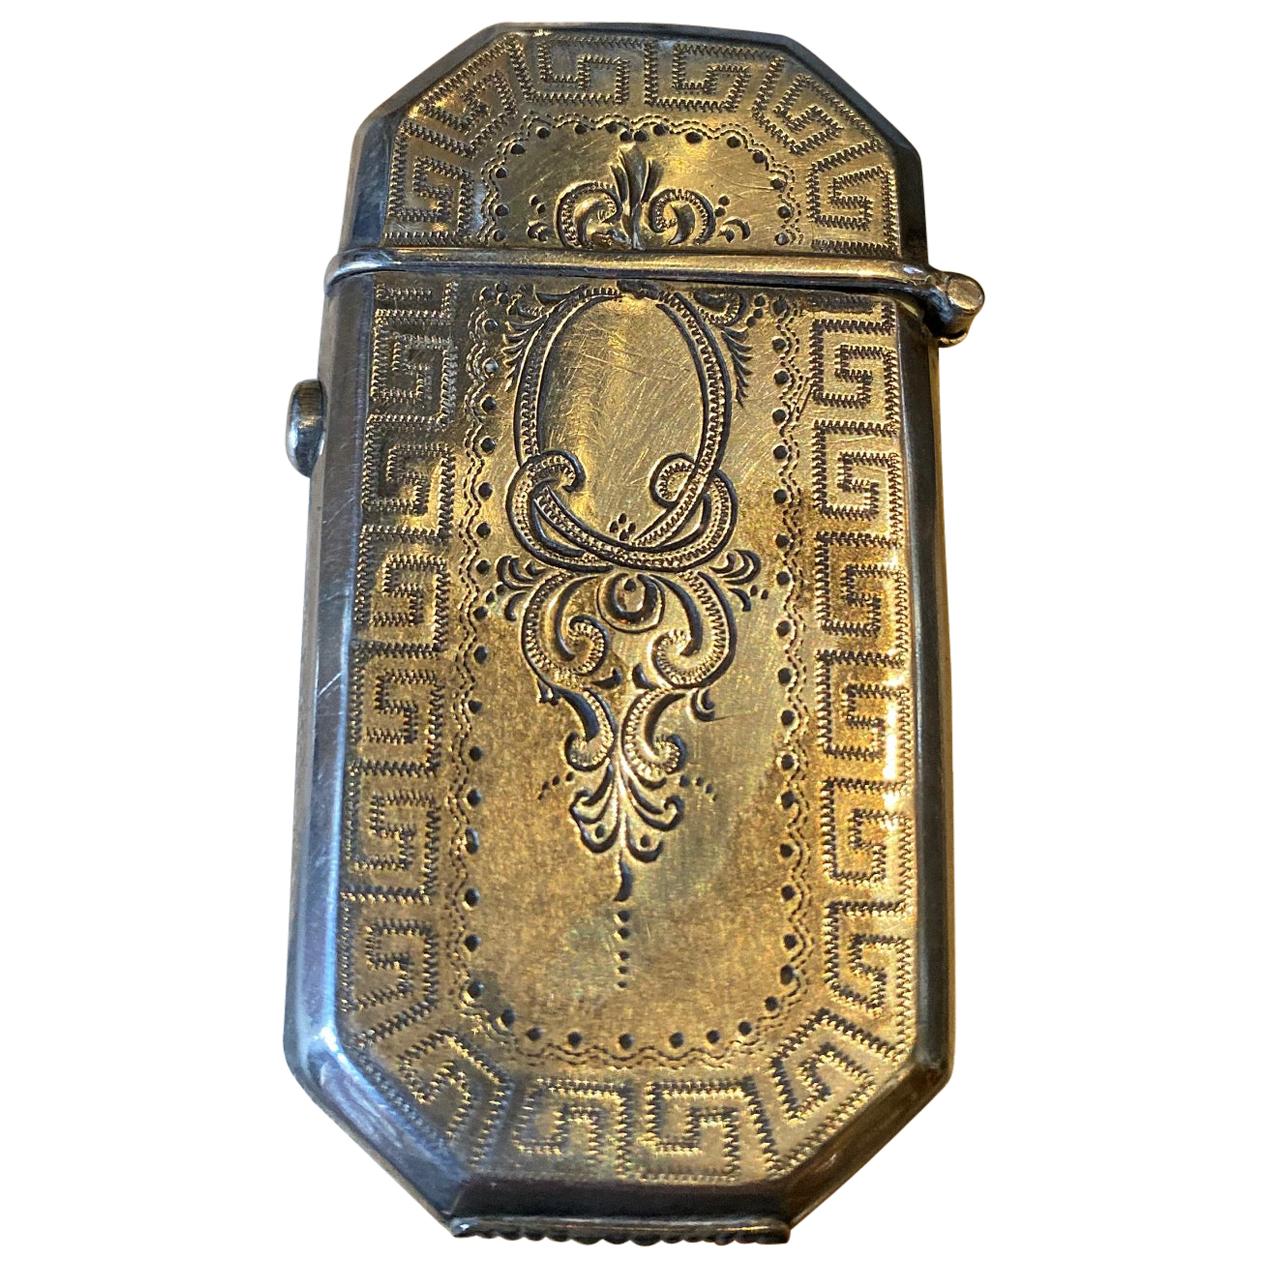 Handcrafted Sterling Silver Match Holder Object Decorative Antique Gift Dealer